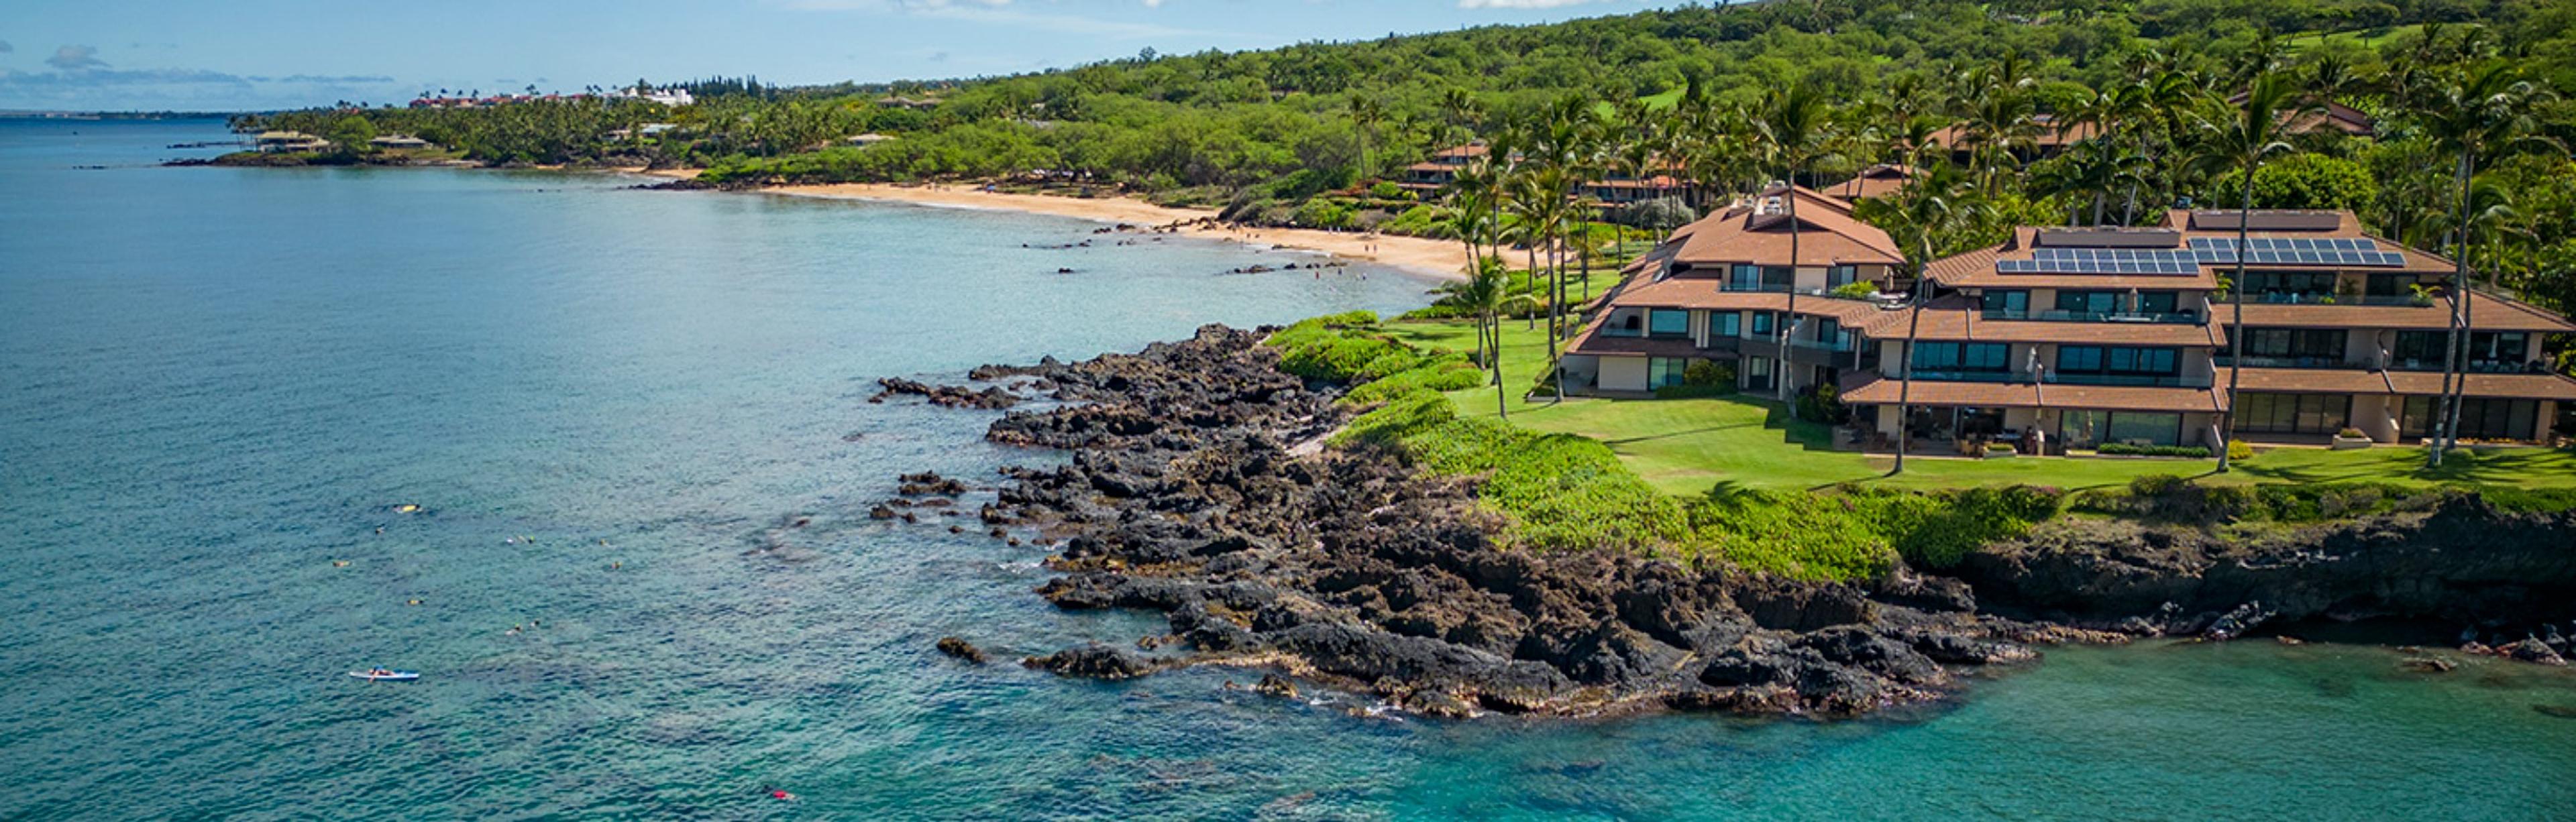 Mākena Surf Resort: Destination Residences Hawaii